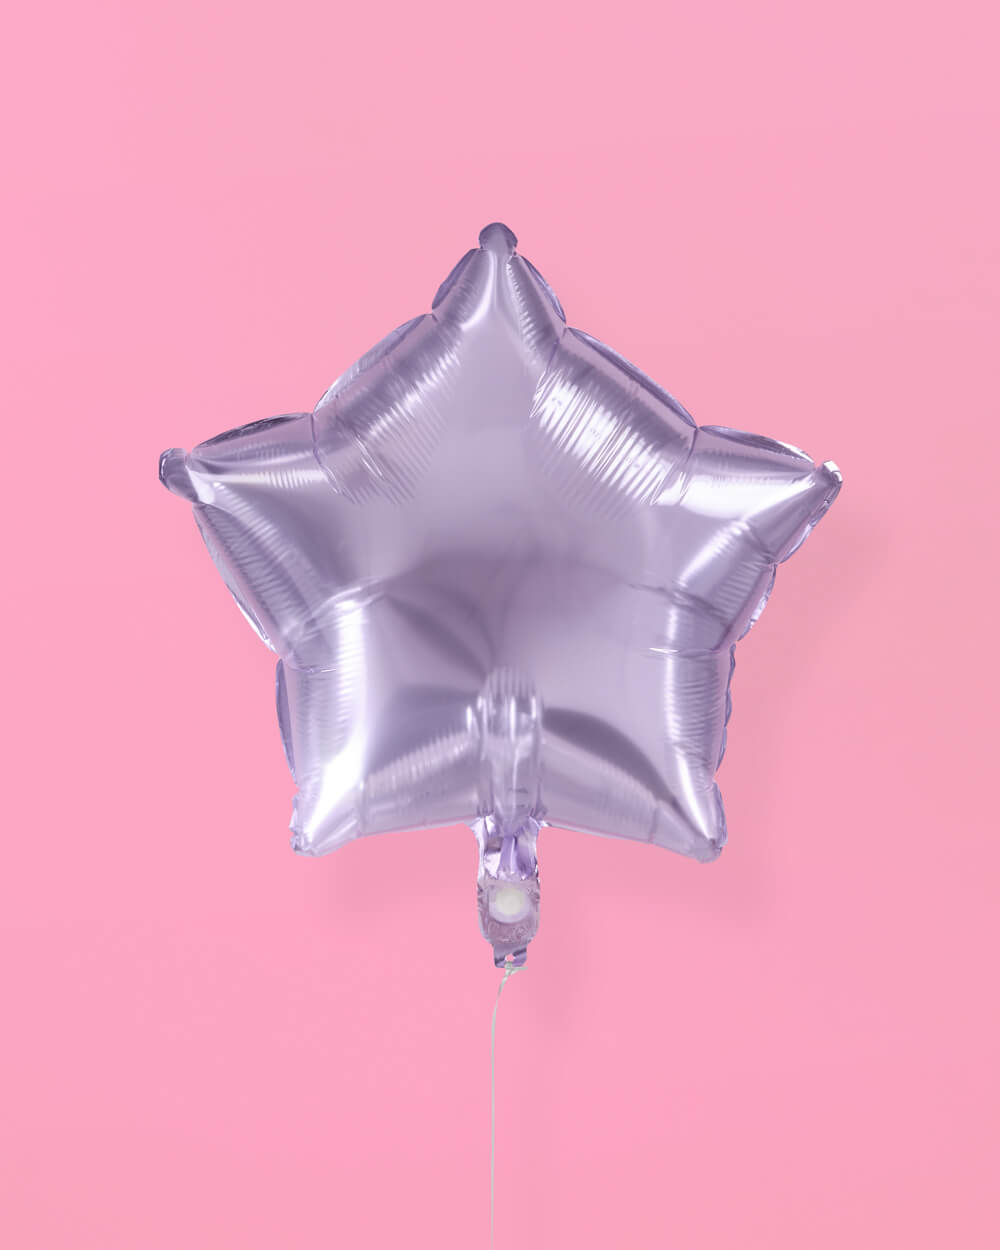 Star ⭐️ Balloons - 4 star balloons